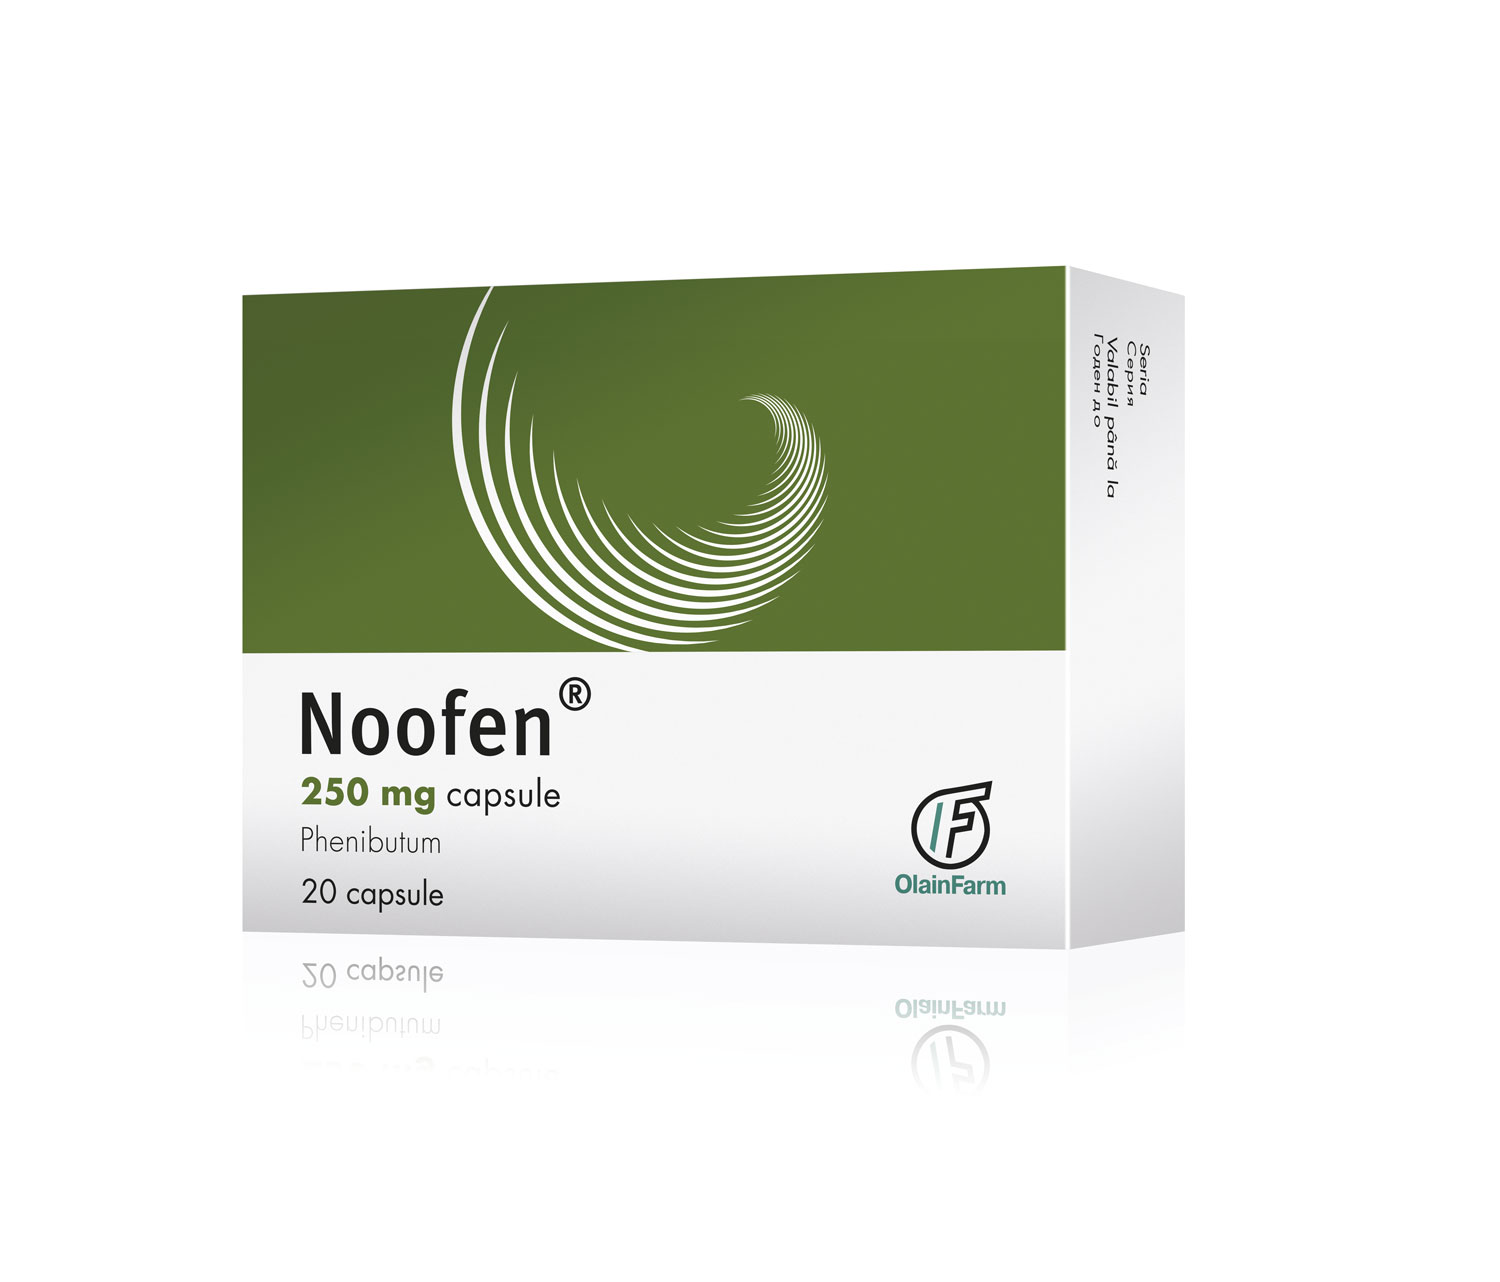 Noofen® - Joint Stock Company Olainfarm